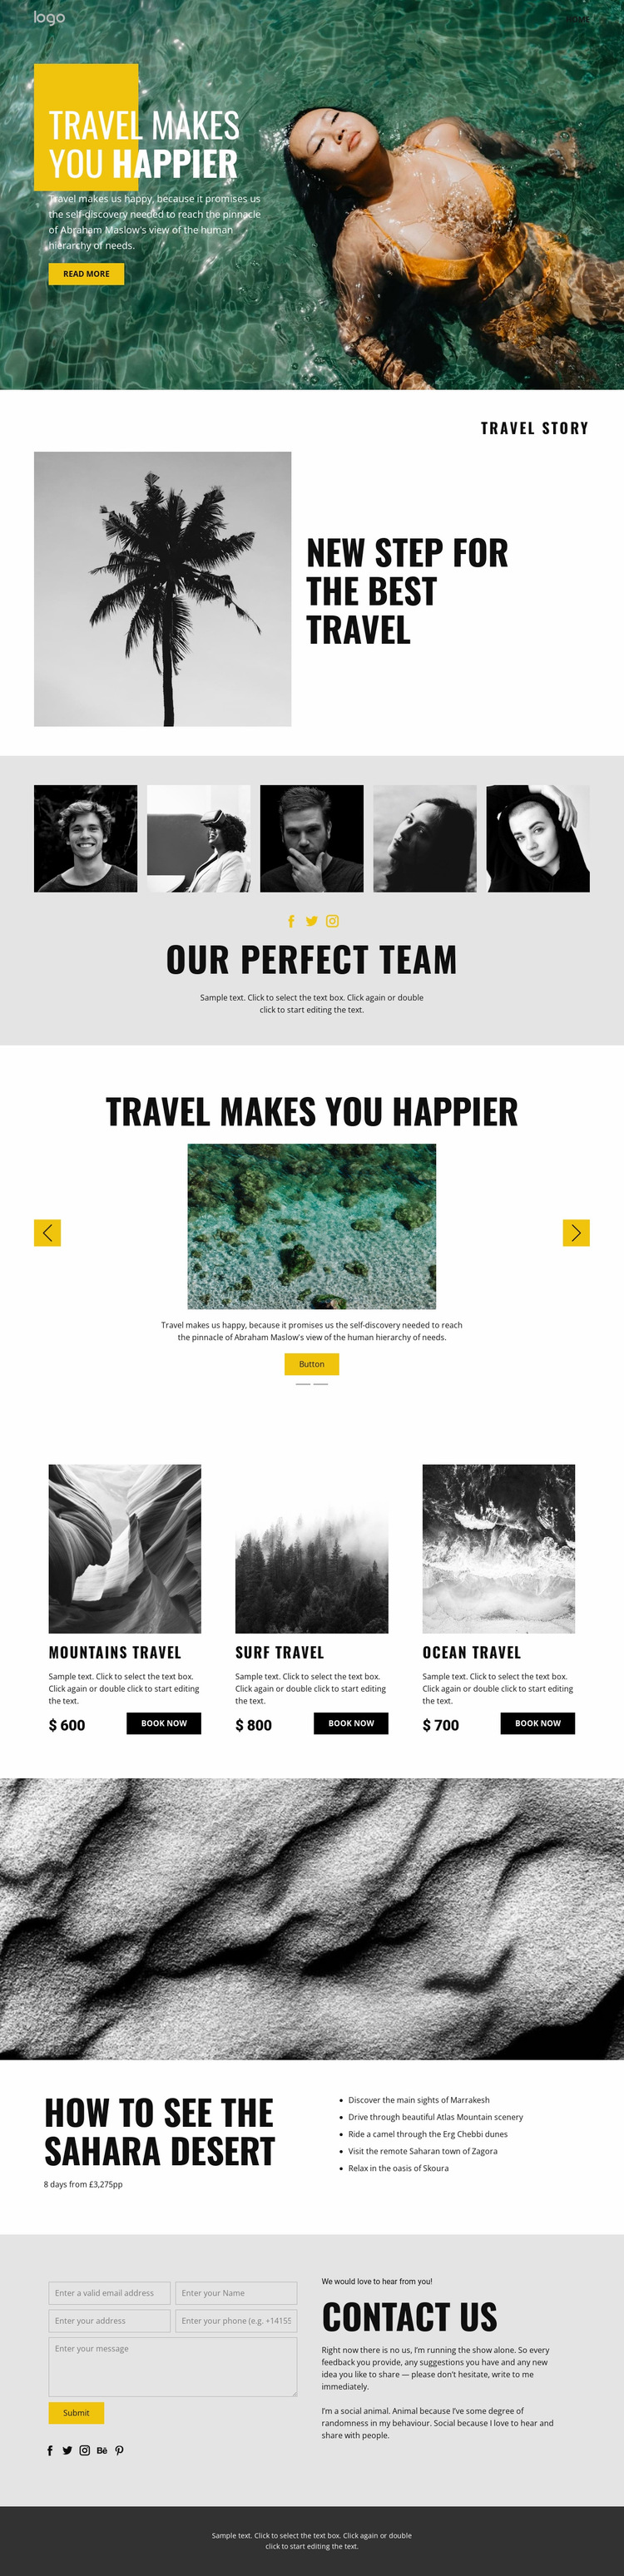 Happy people deserve travel Website Builder Templates